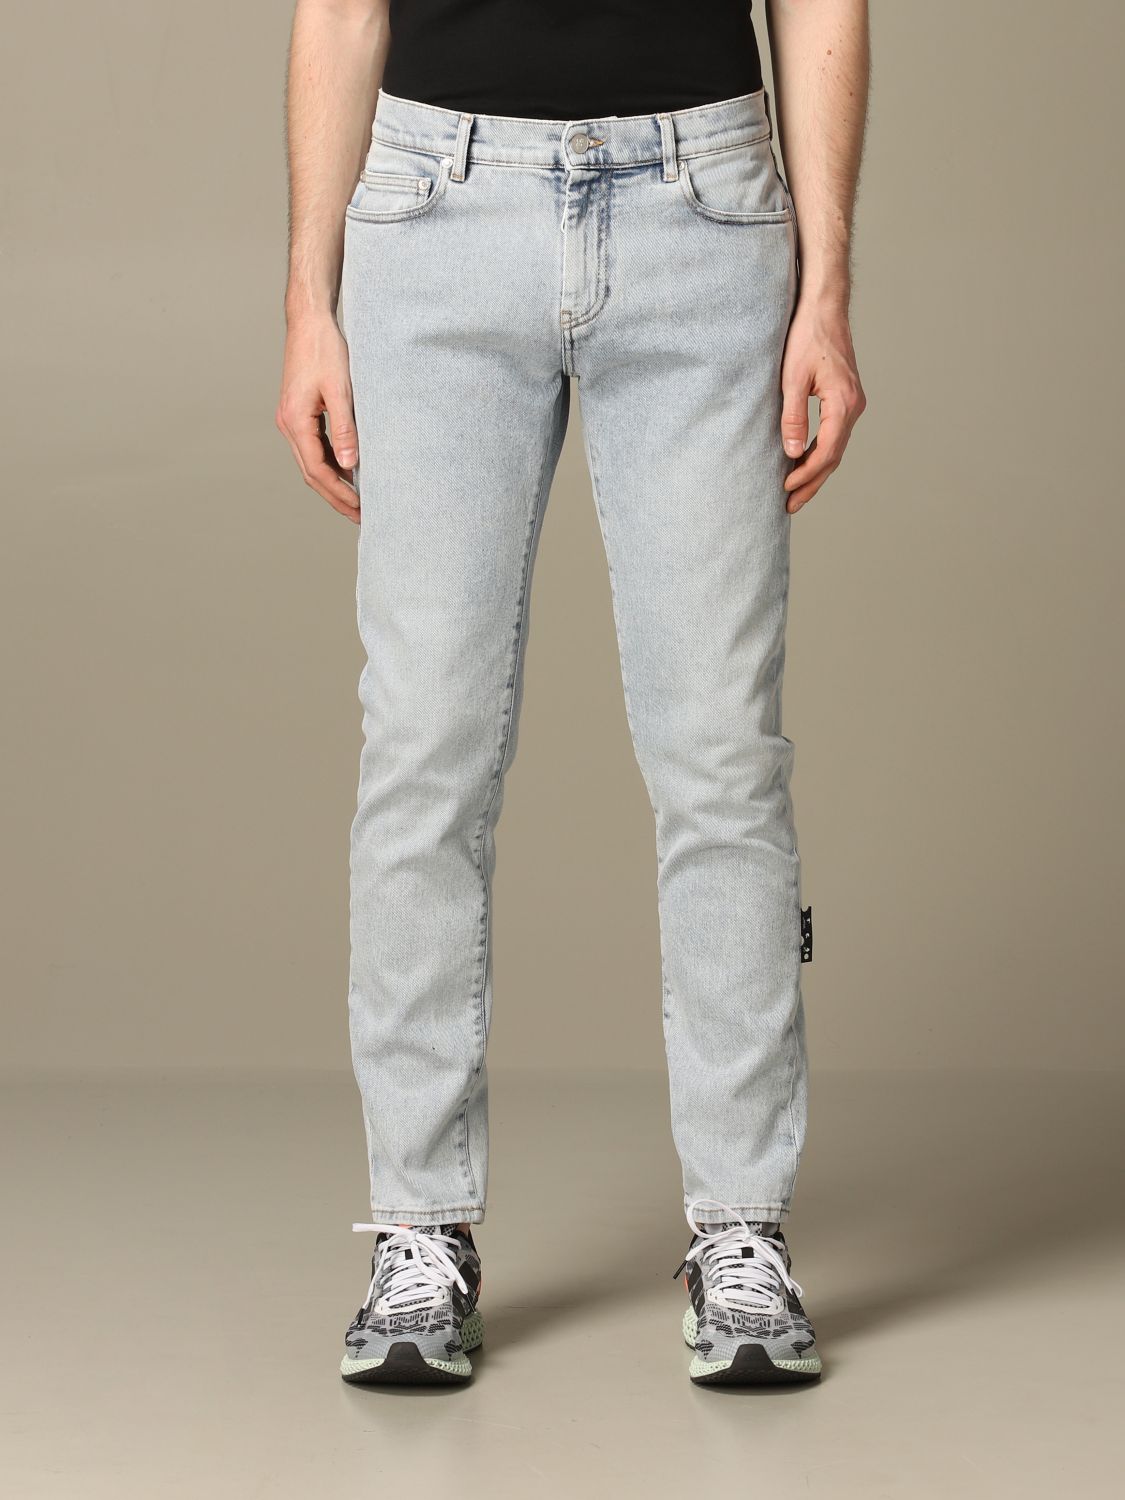 white jeans regular fit